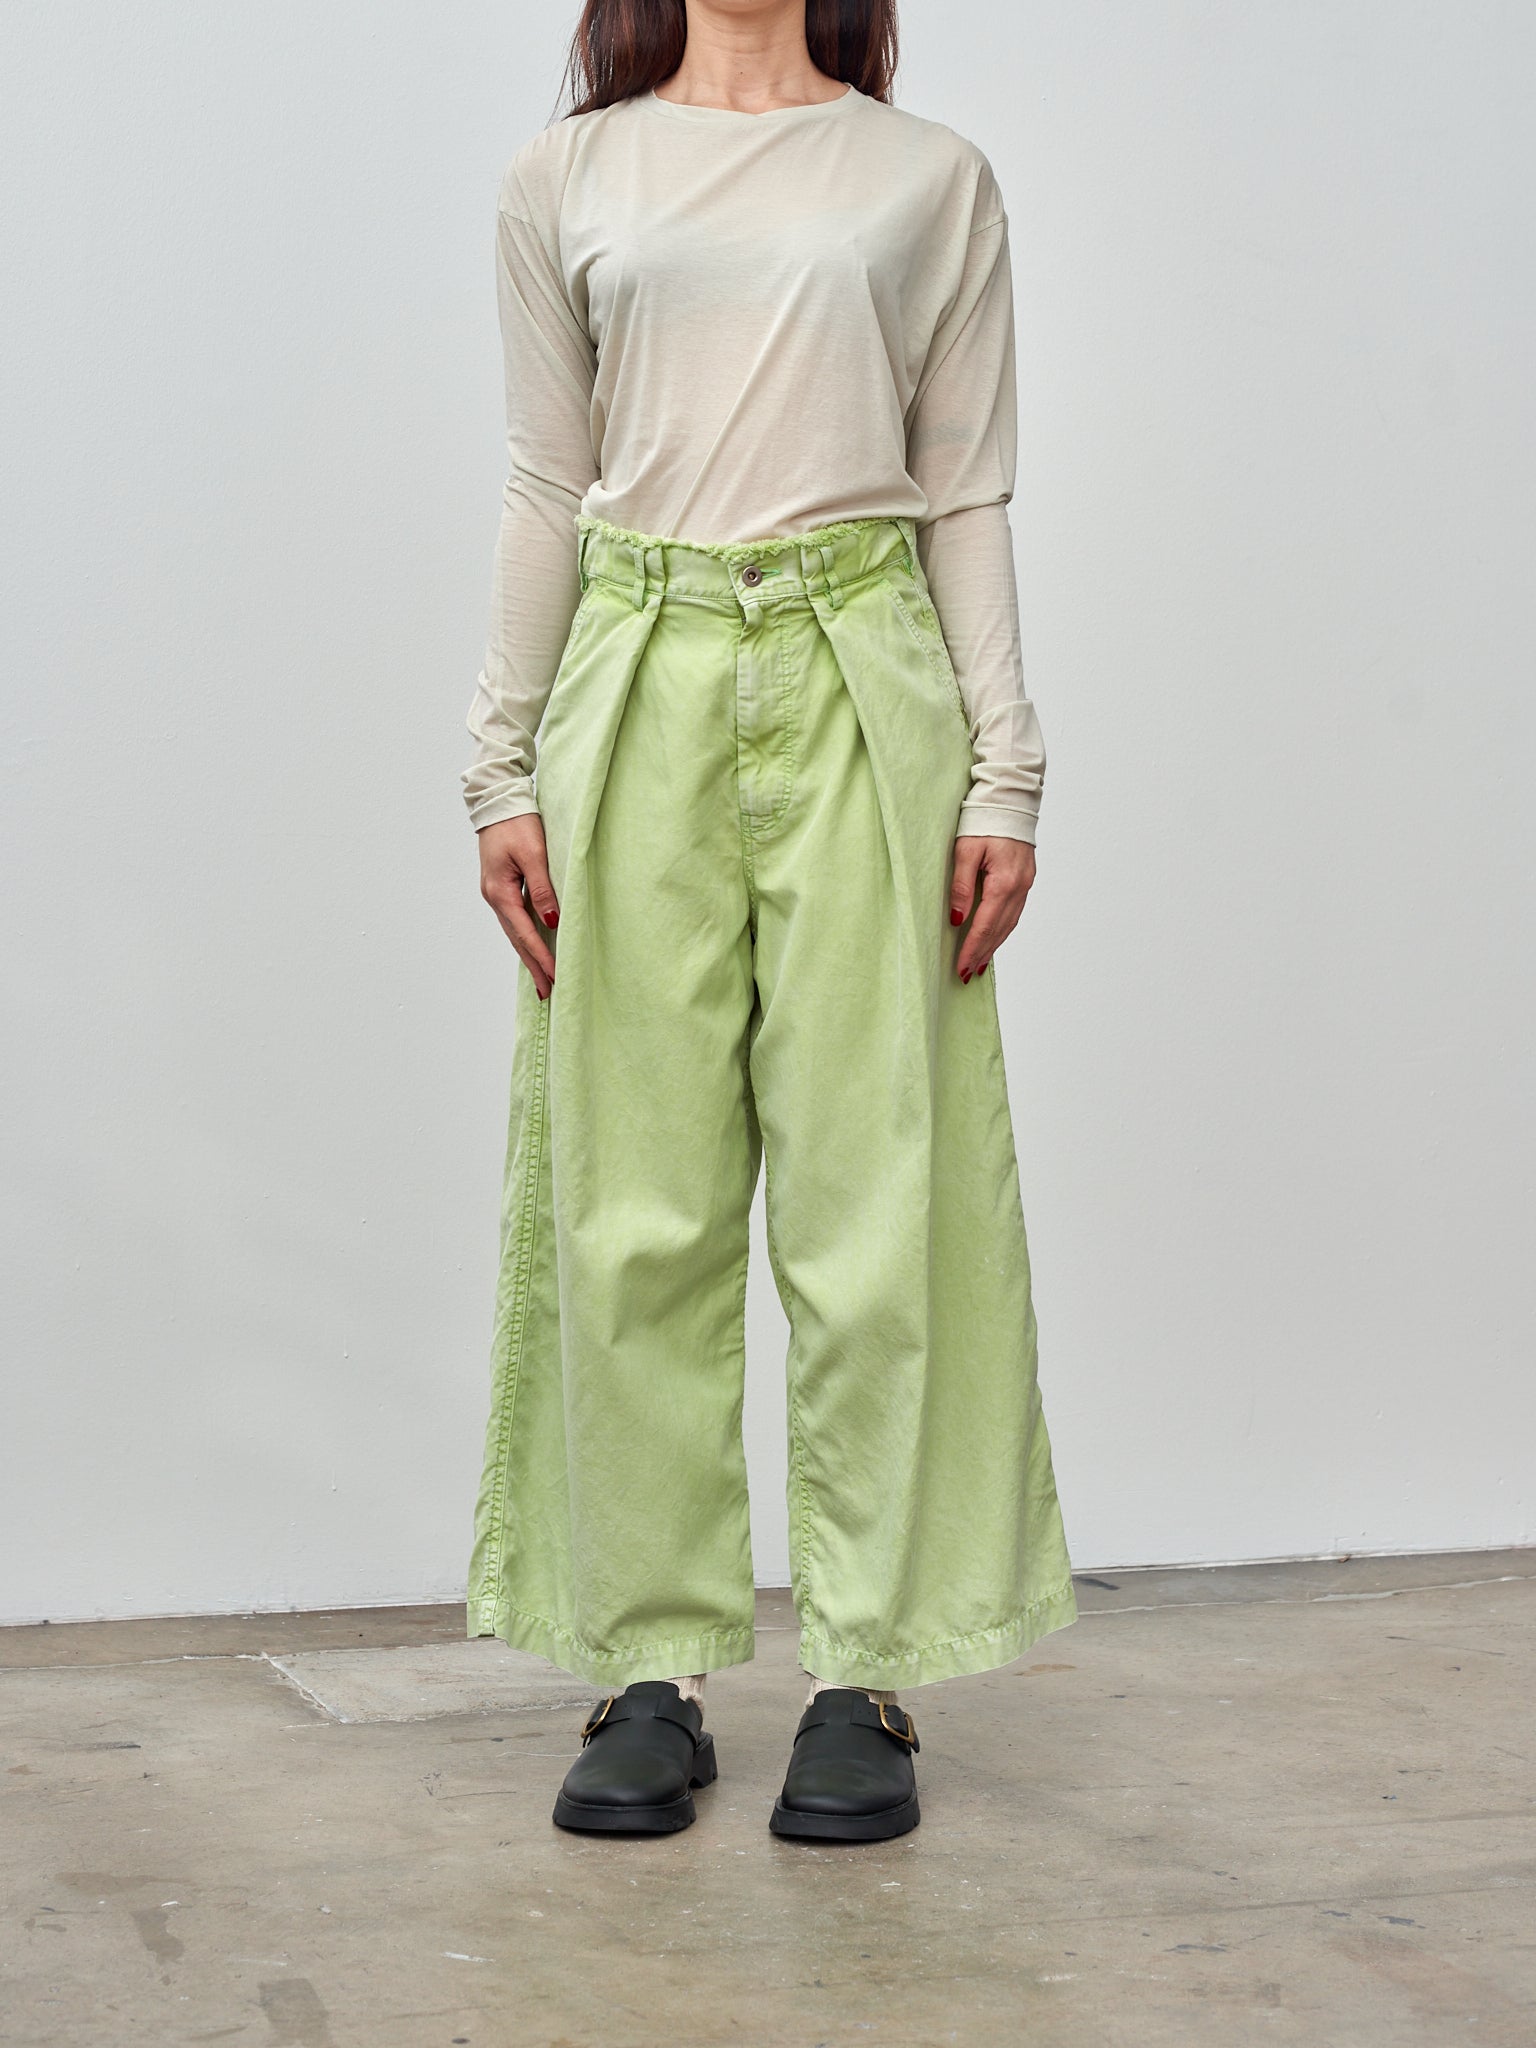 Namu Shop - Unfil Twisted Cotton Sheer Jersey Long Sleeve Tee - Fog Green